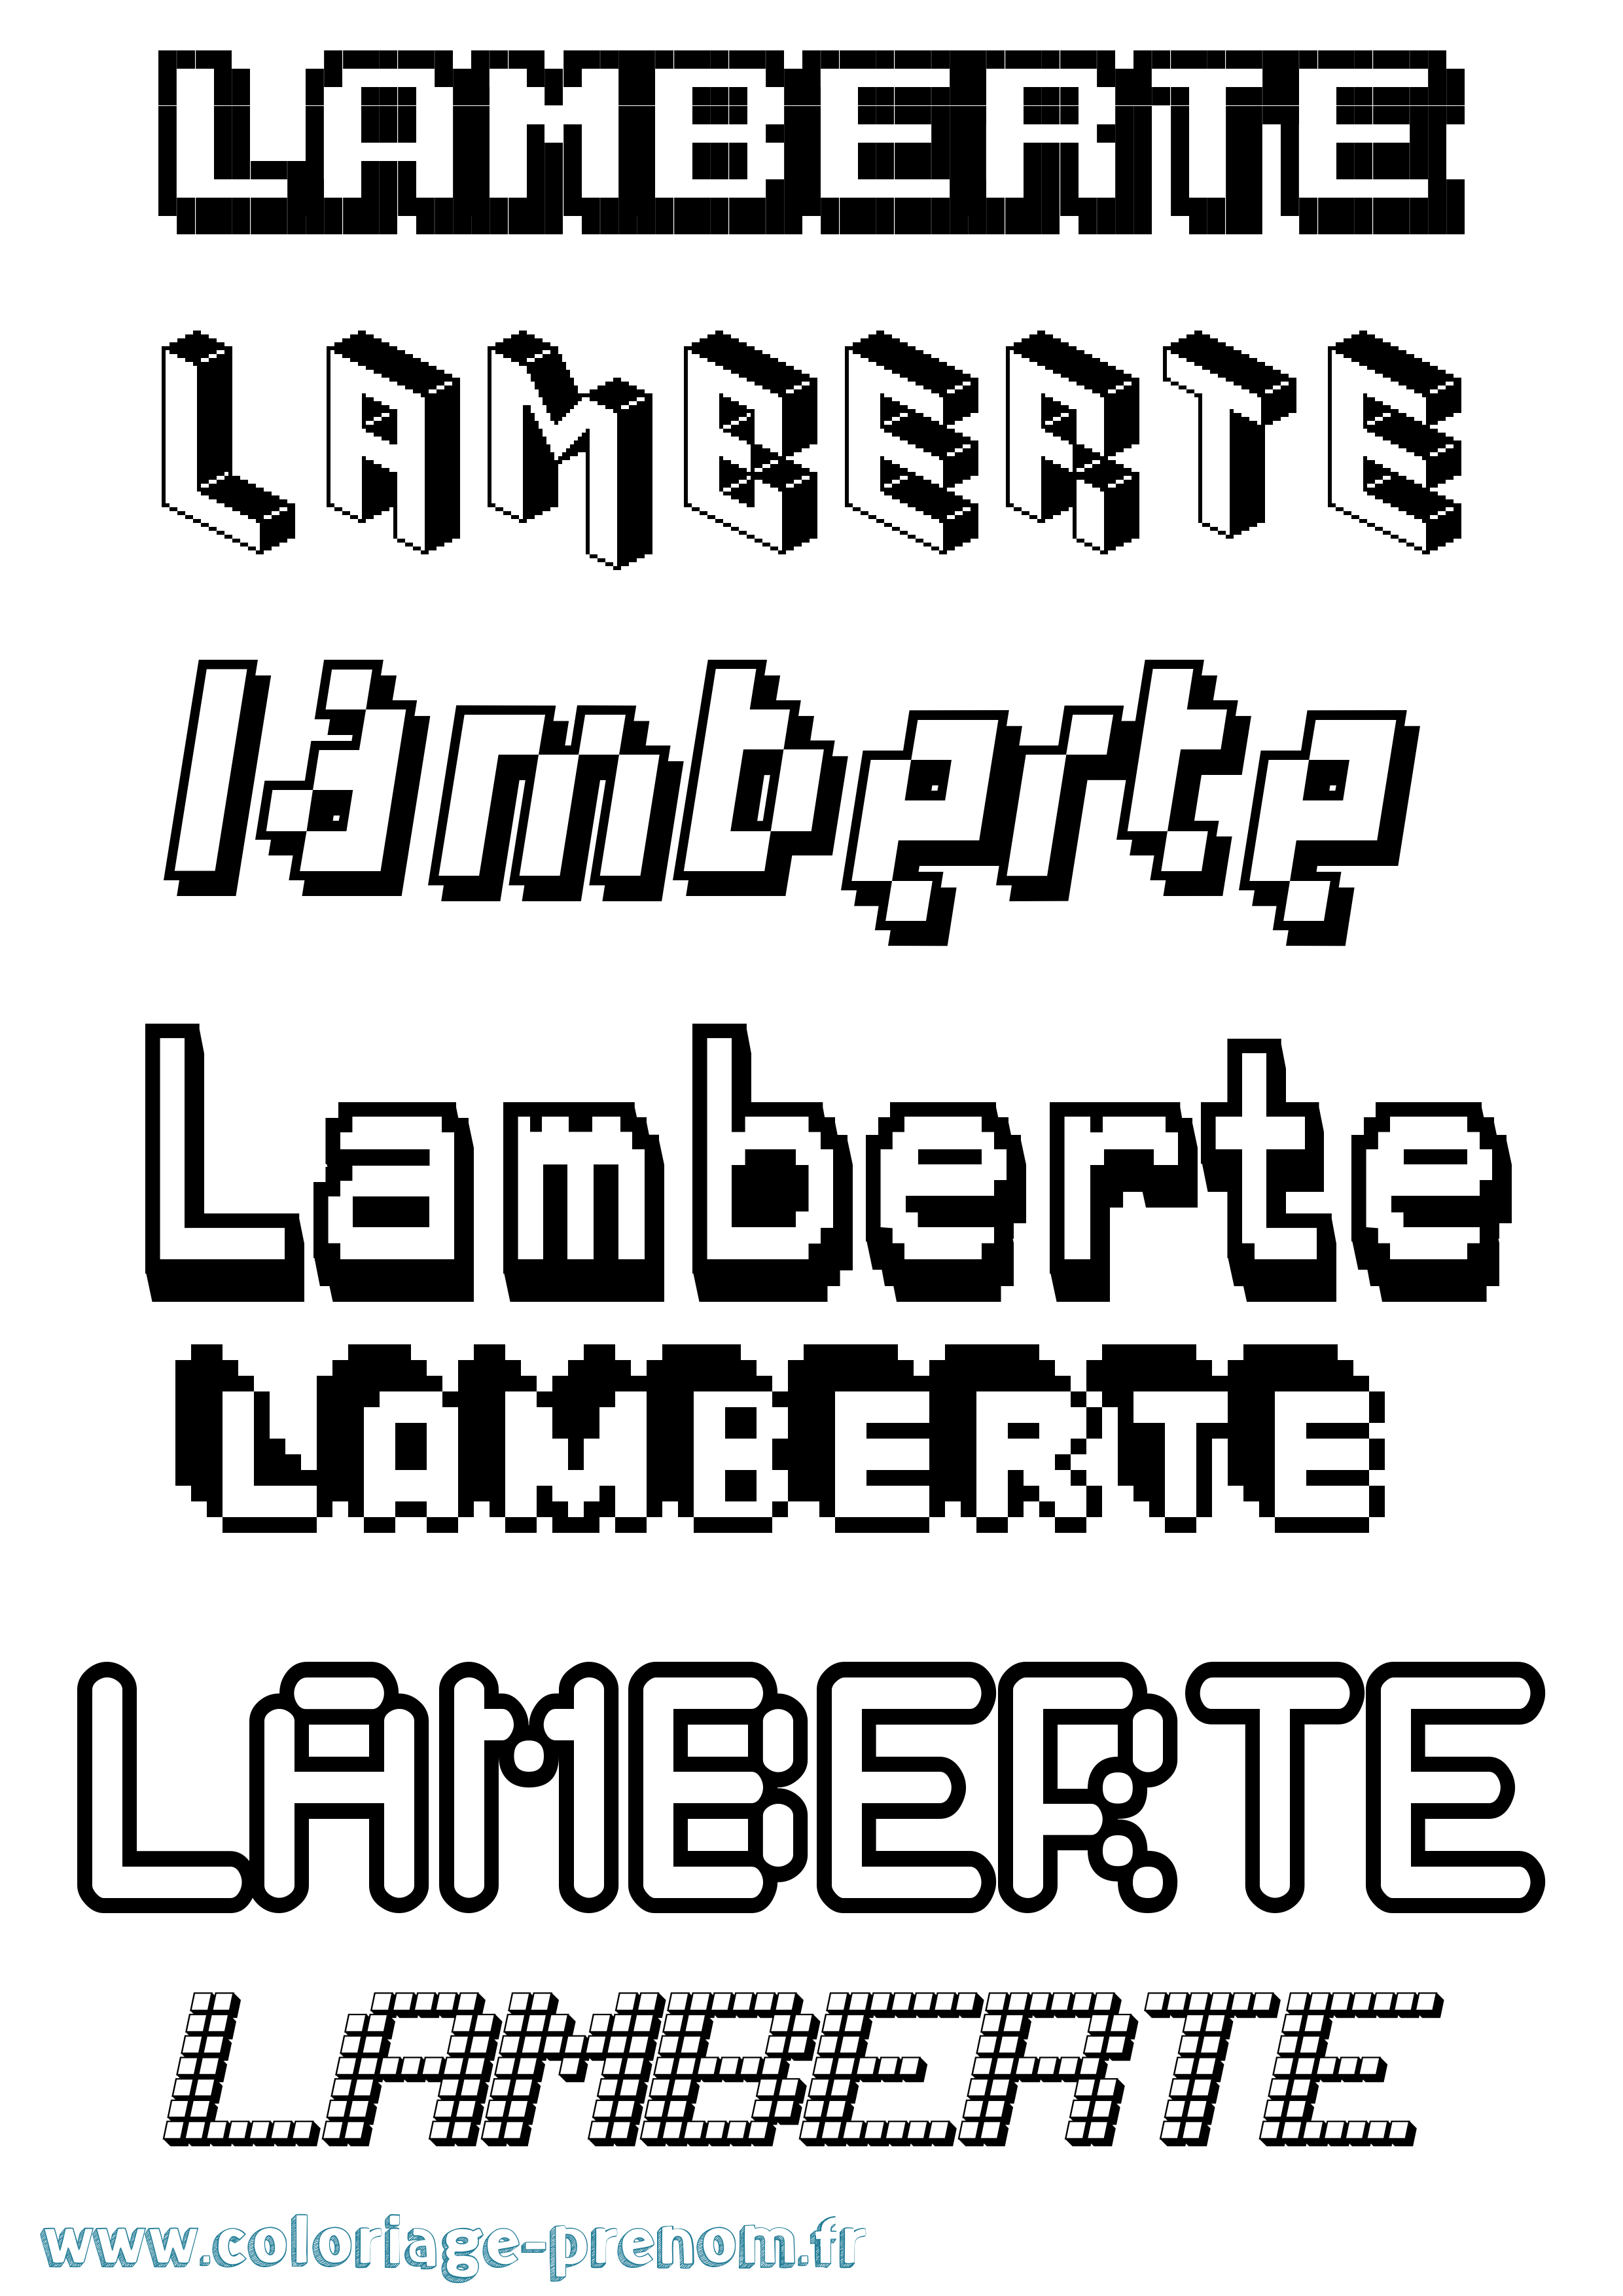 Coloriage prénom Lamberte Pixel